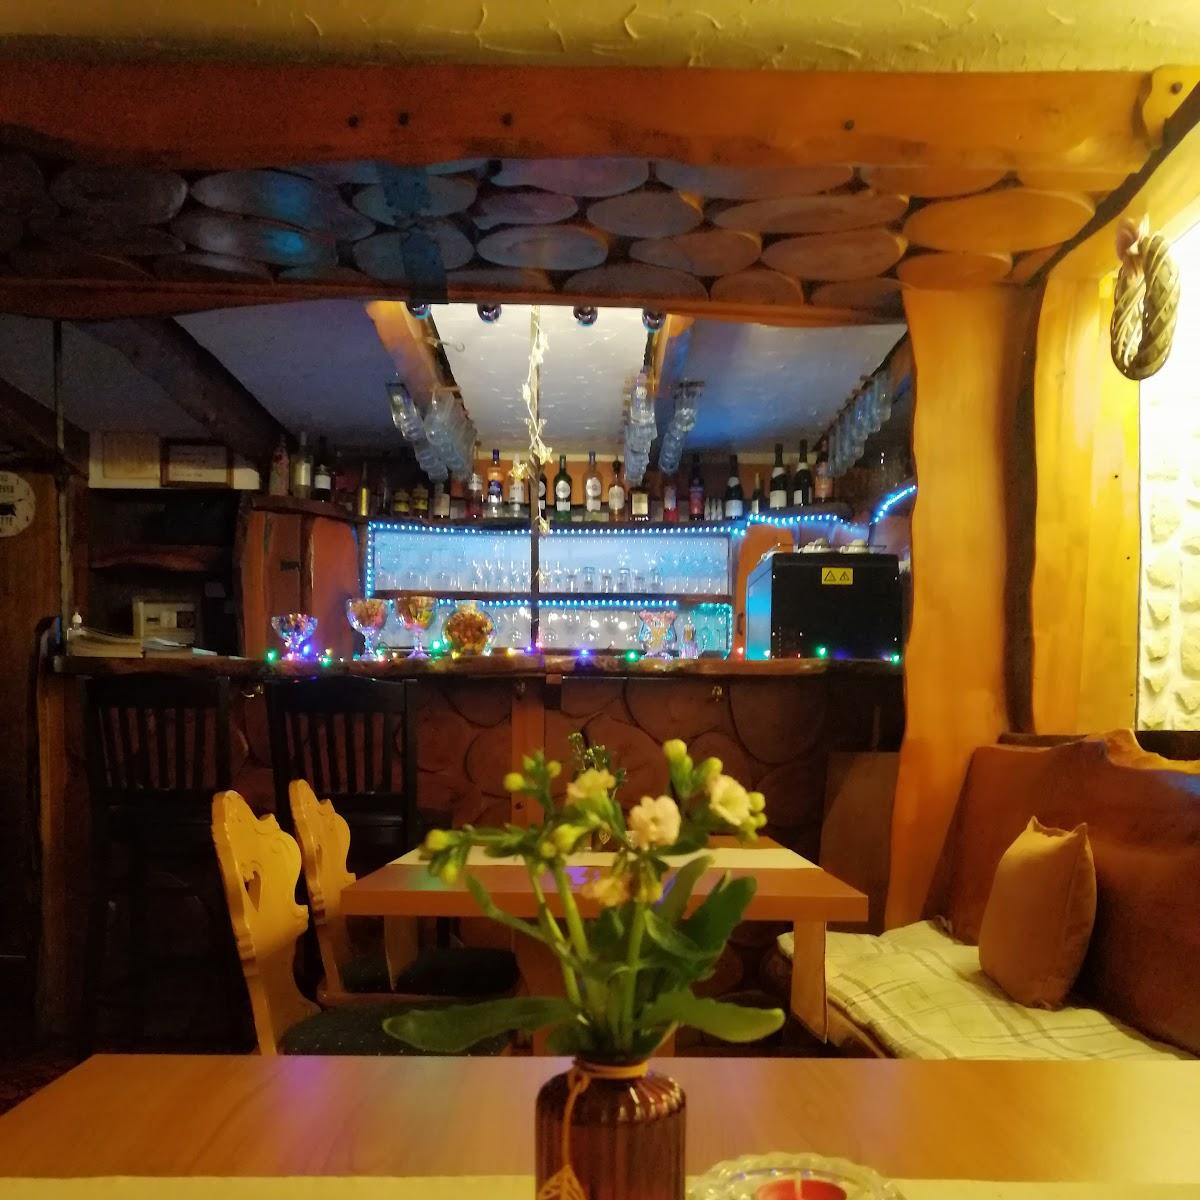 Restaurant "Taverna Akropolis" in Bad Herrenalb